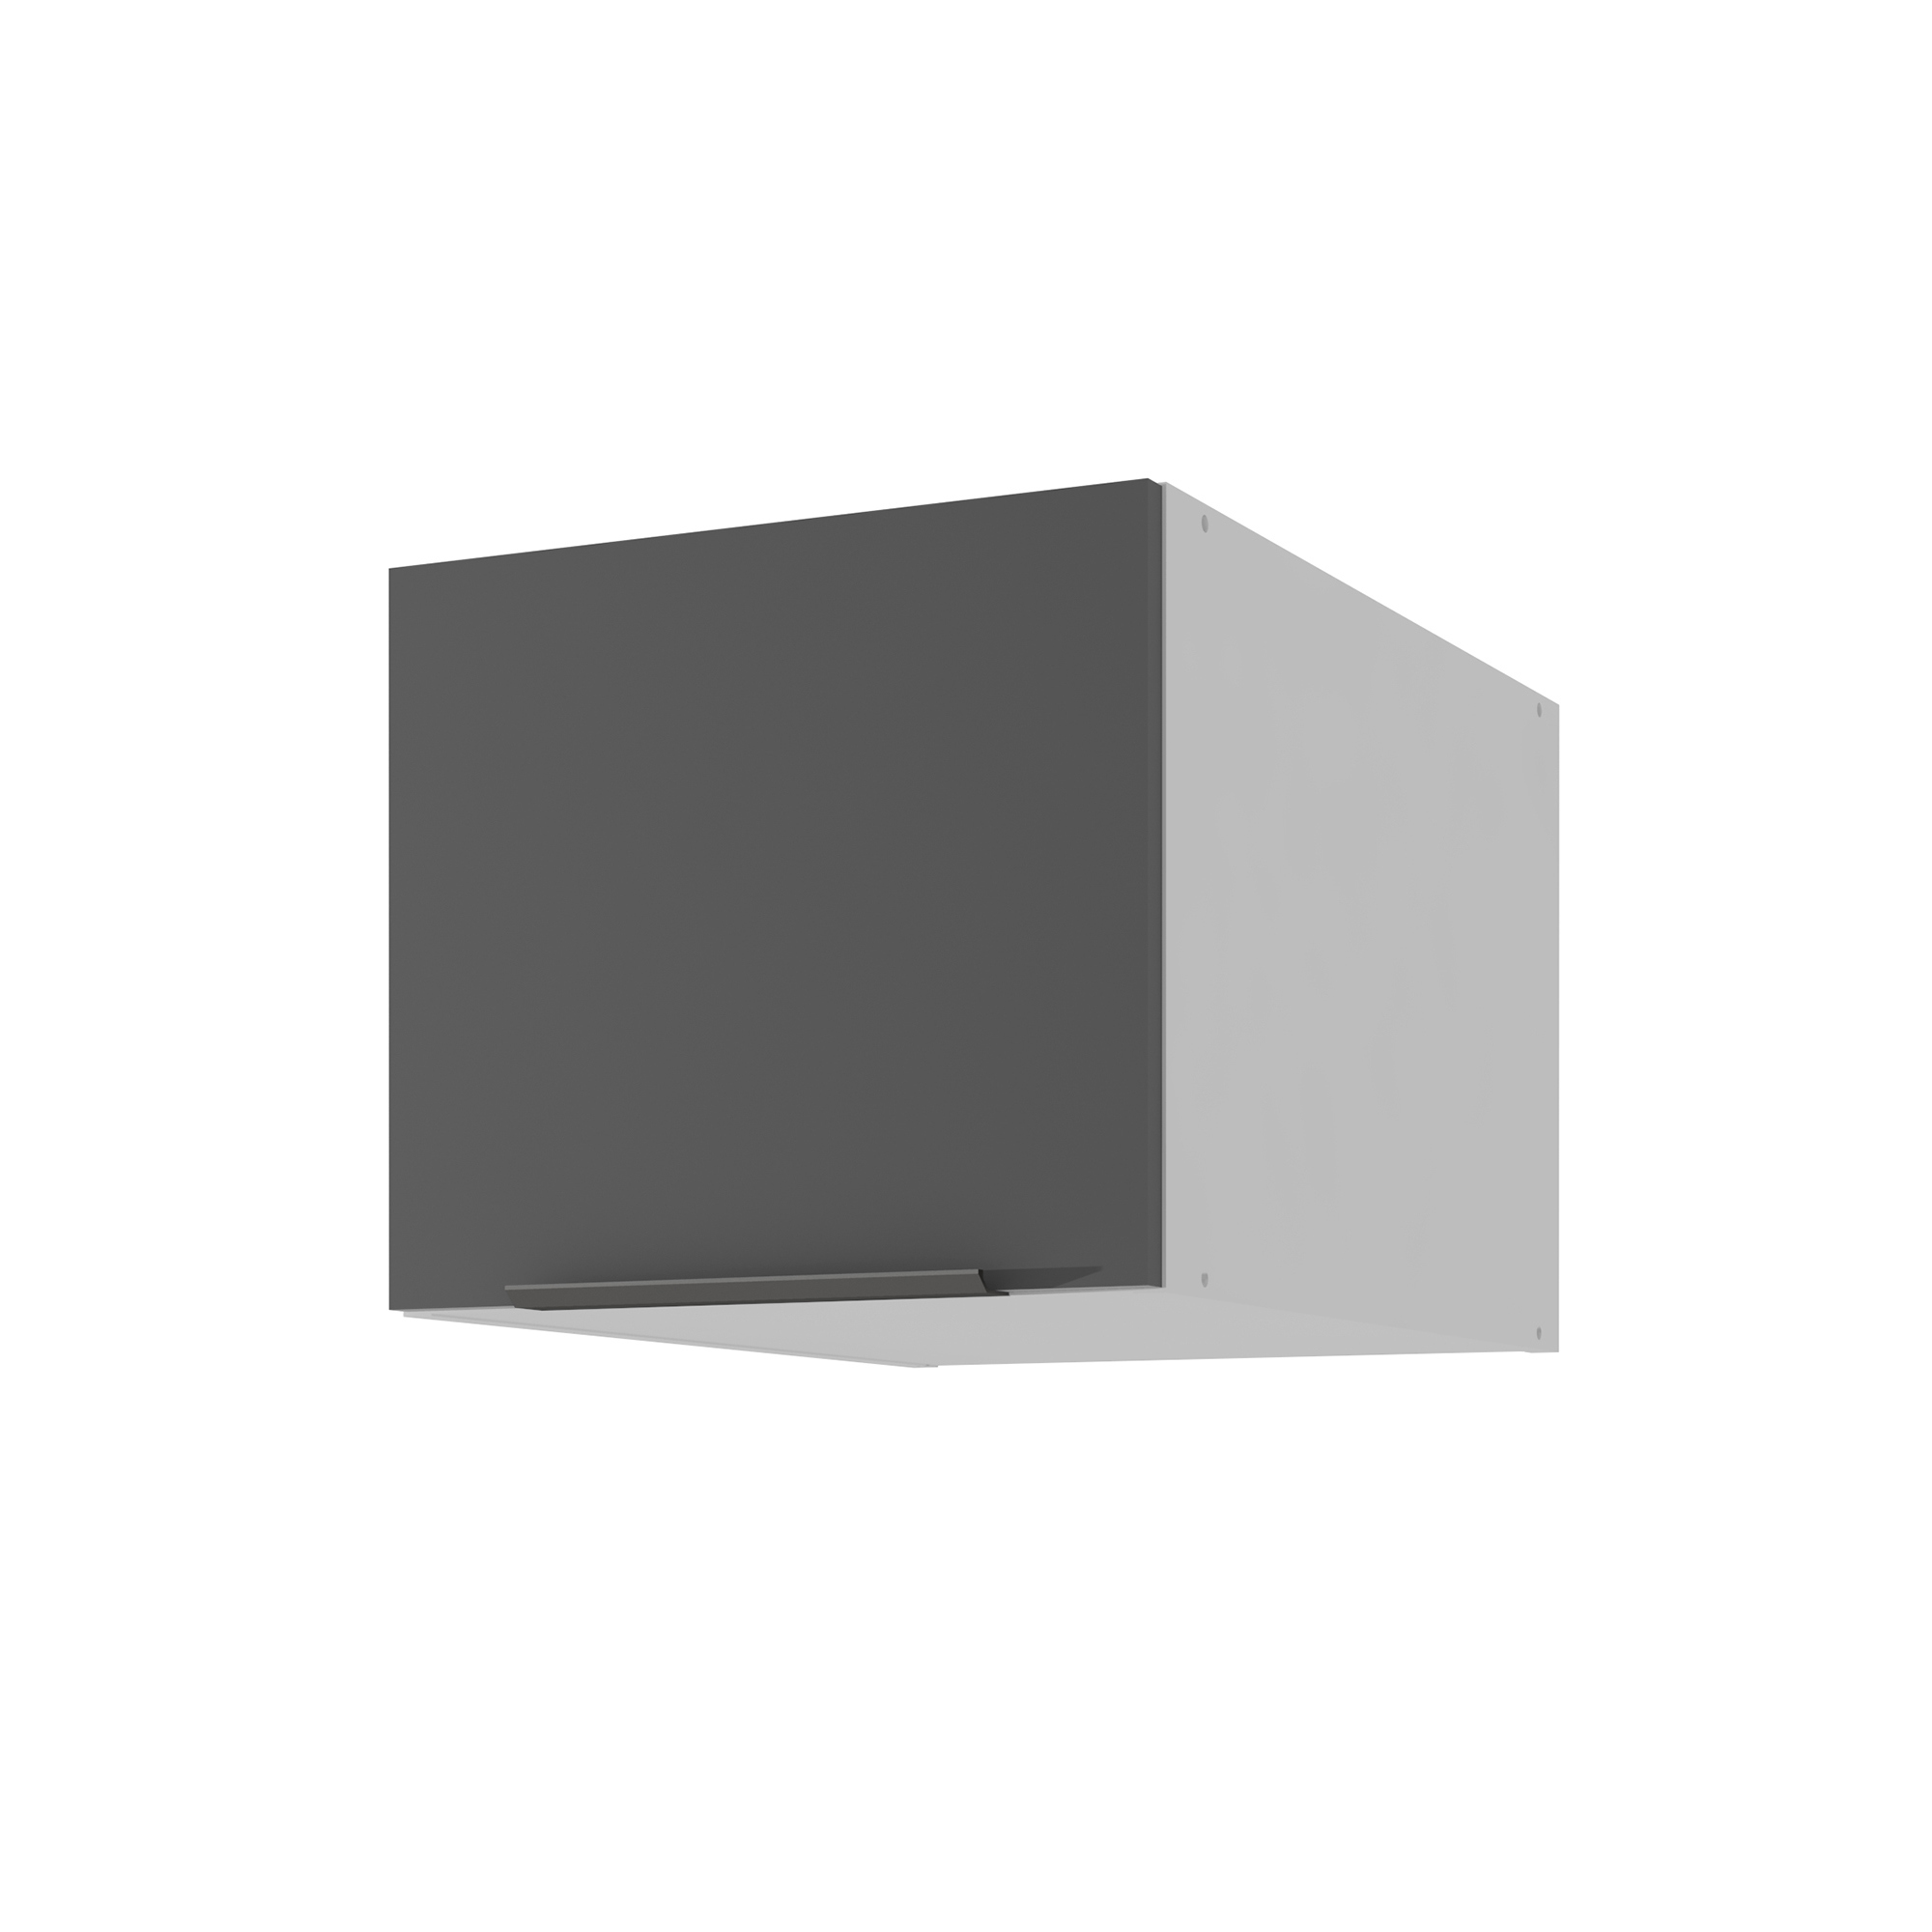 91099720 Навесной шкаф антресольный 40х36х57.6 см ЛДСП цвет черно-серый Color STLM-0483995 BENELI